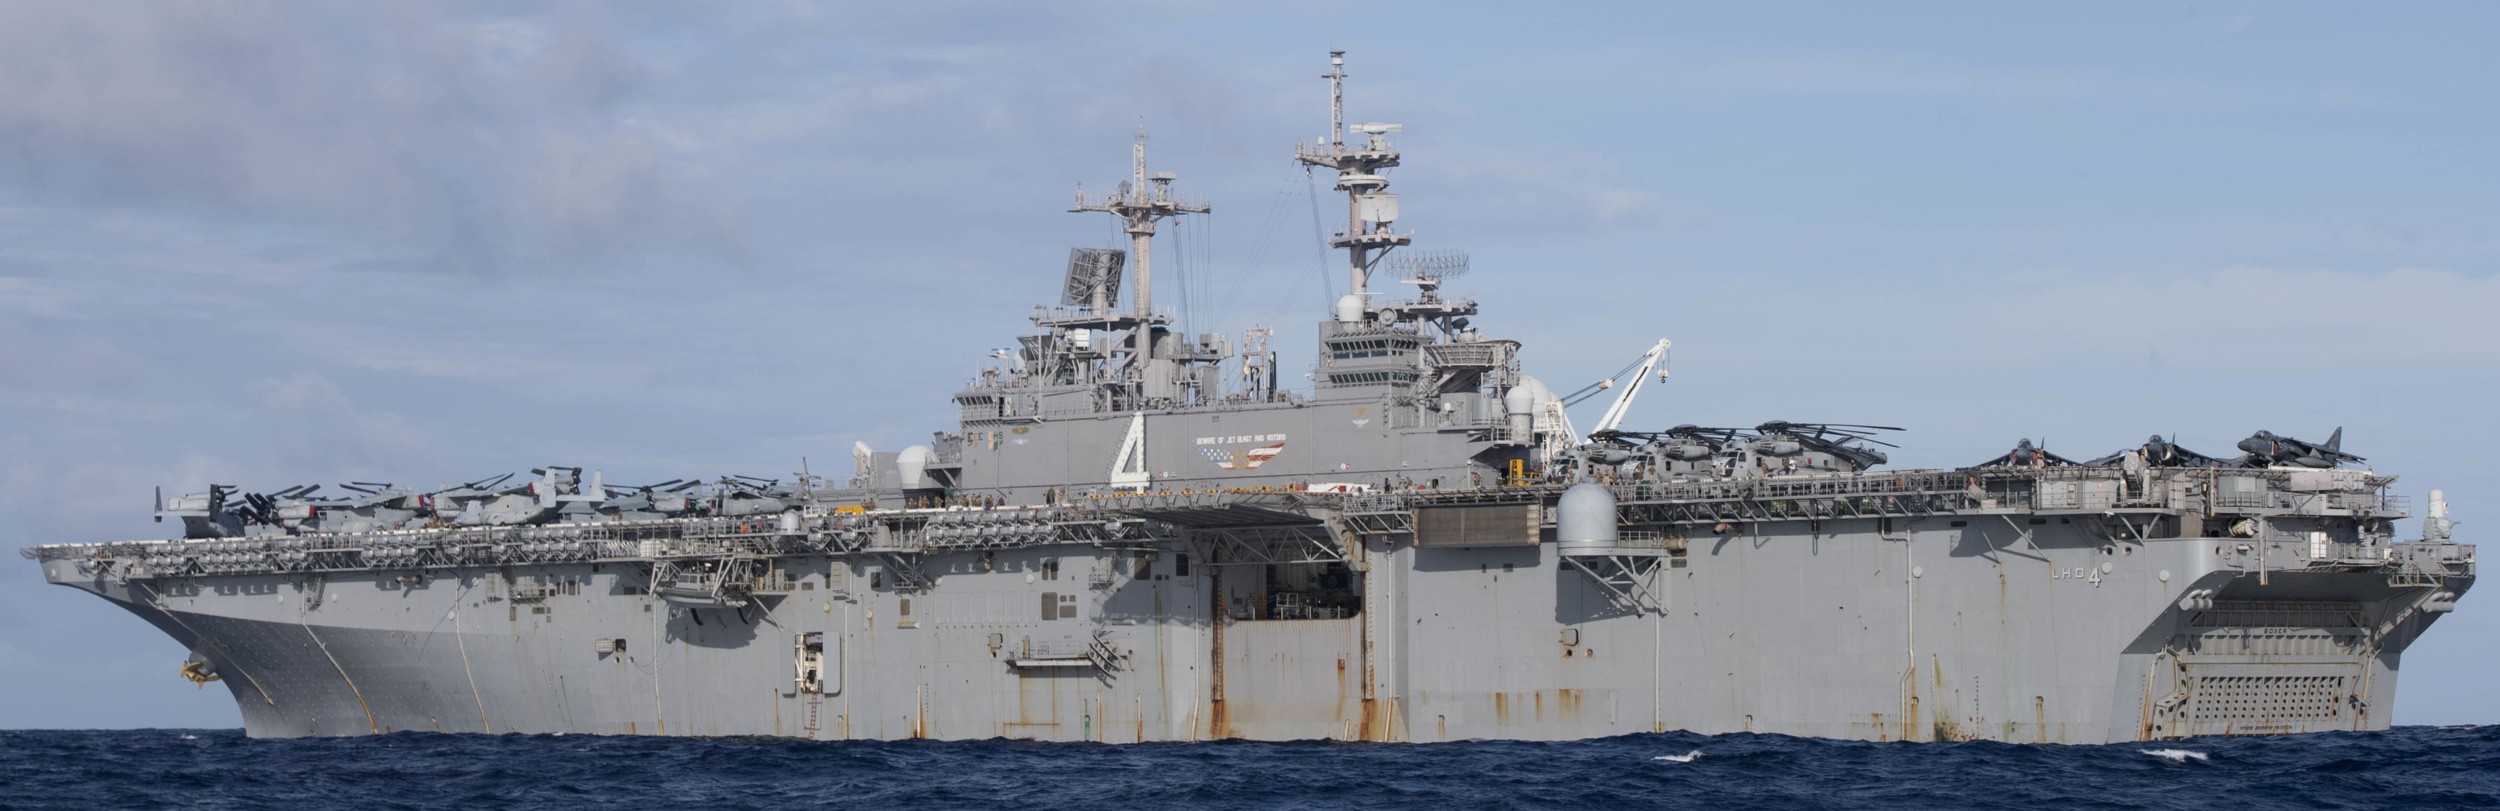 lhd-4 uss boxer wasp class amphibious assault ship landing helicopter dock us navy vmm-163 marines 145